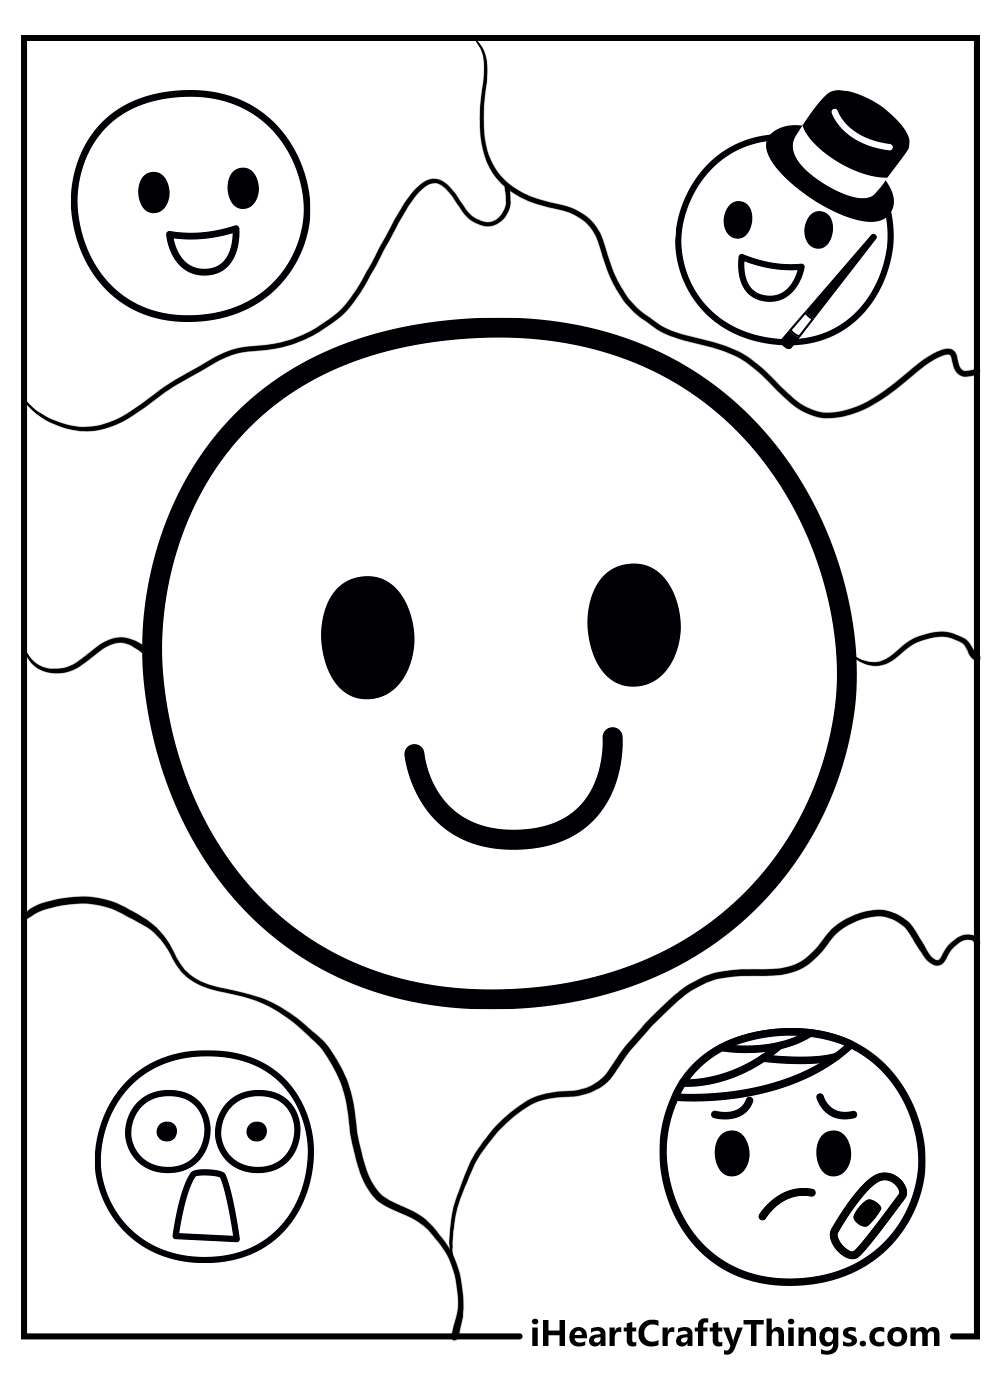 Printable emoji coloring pages updated